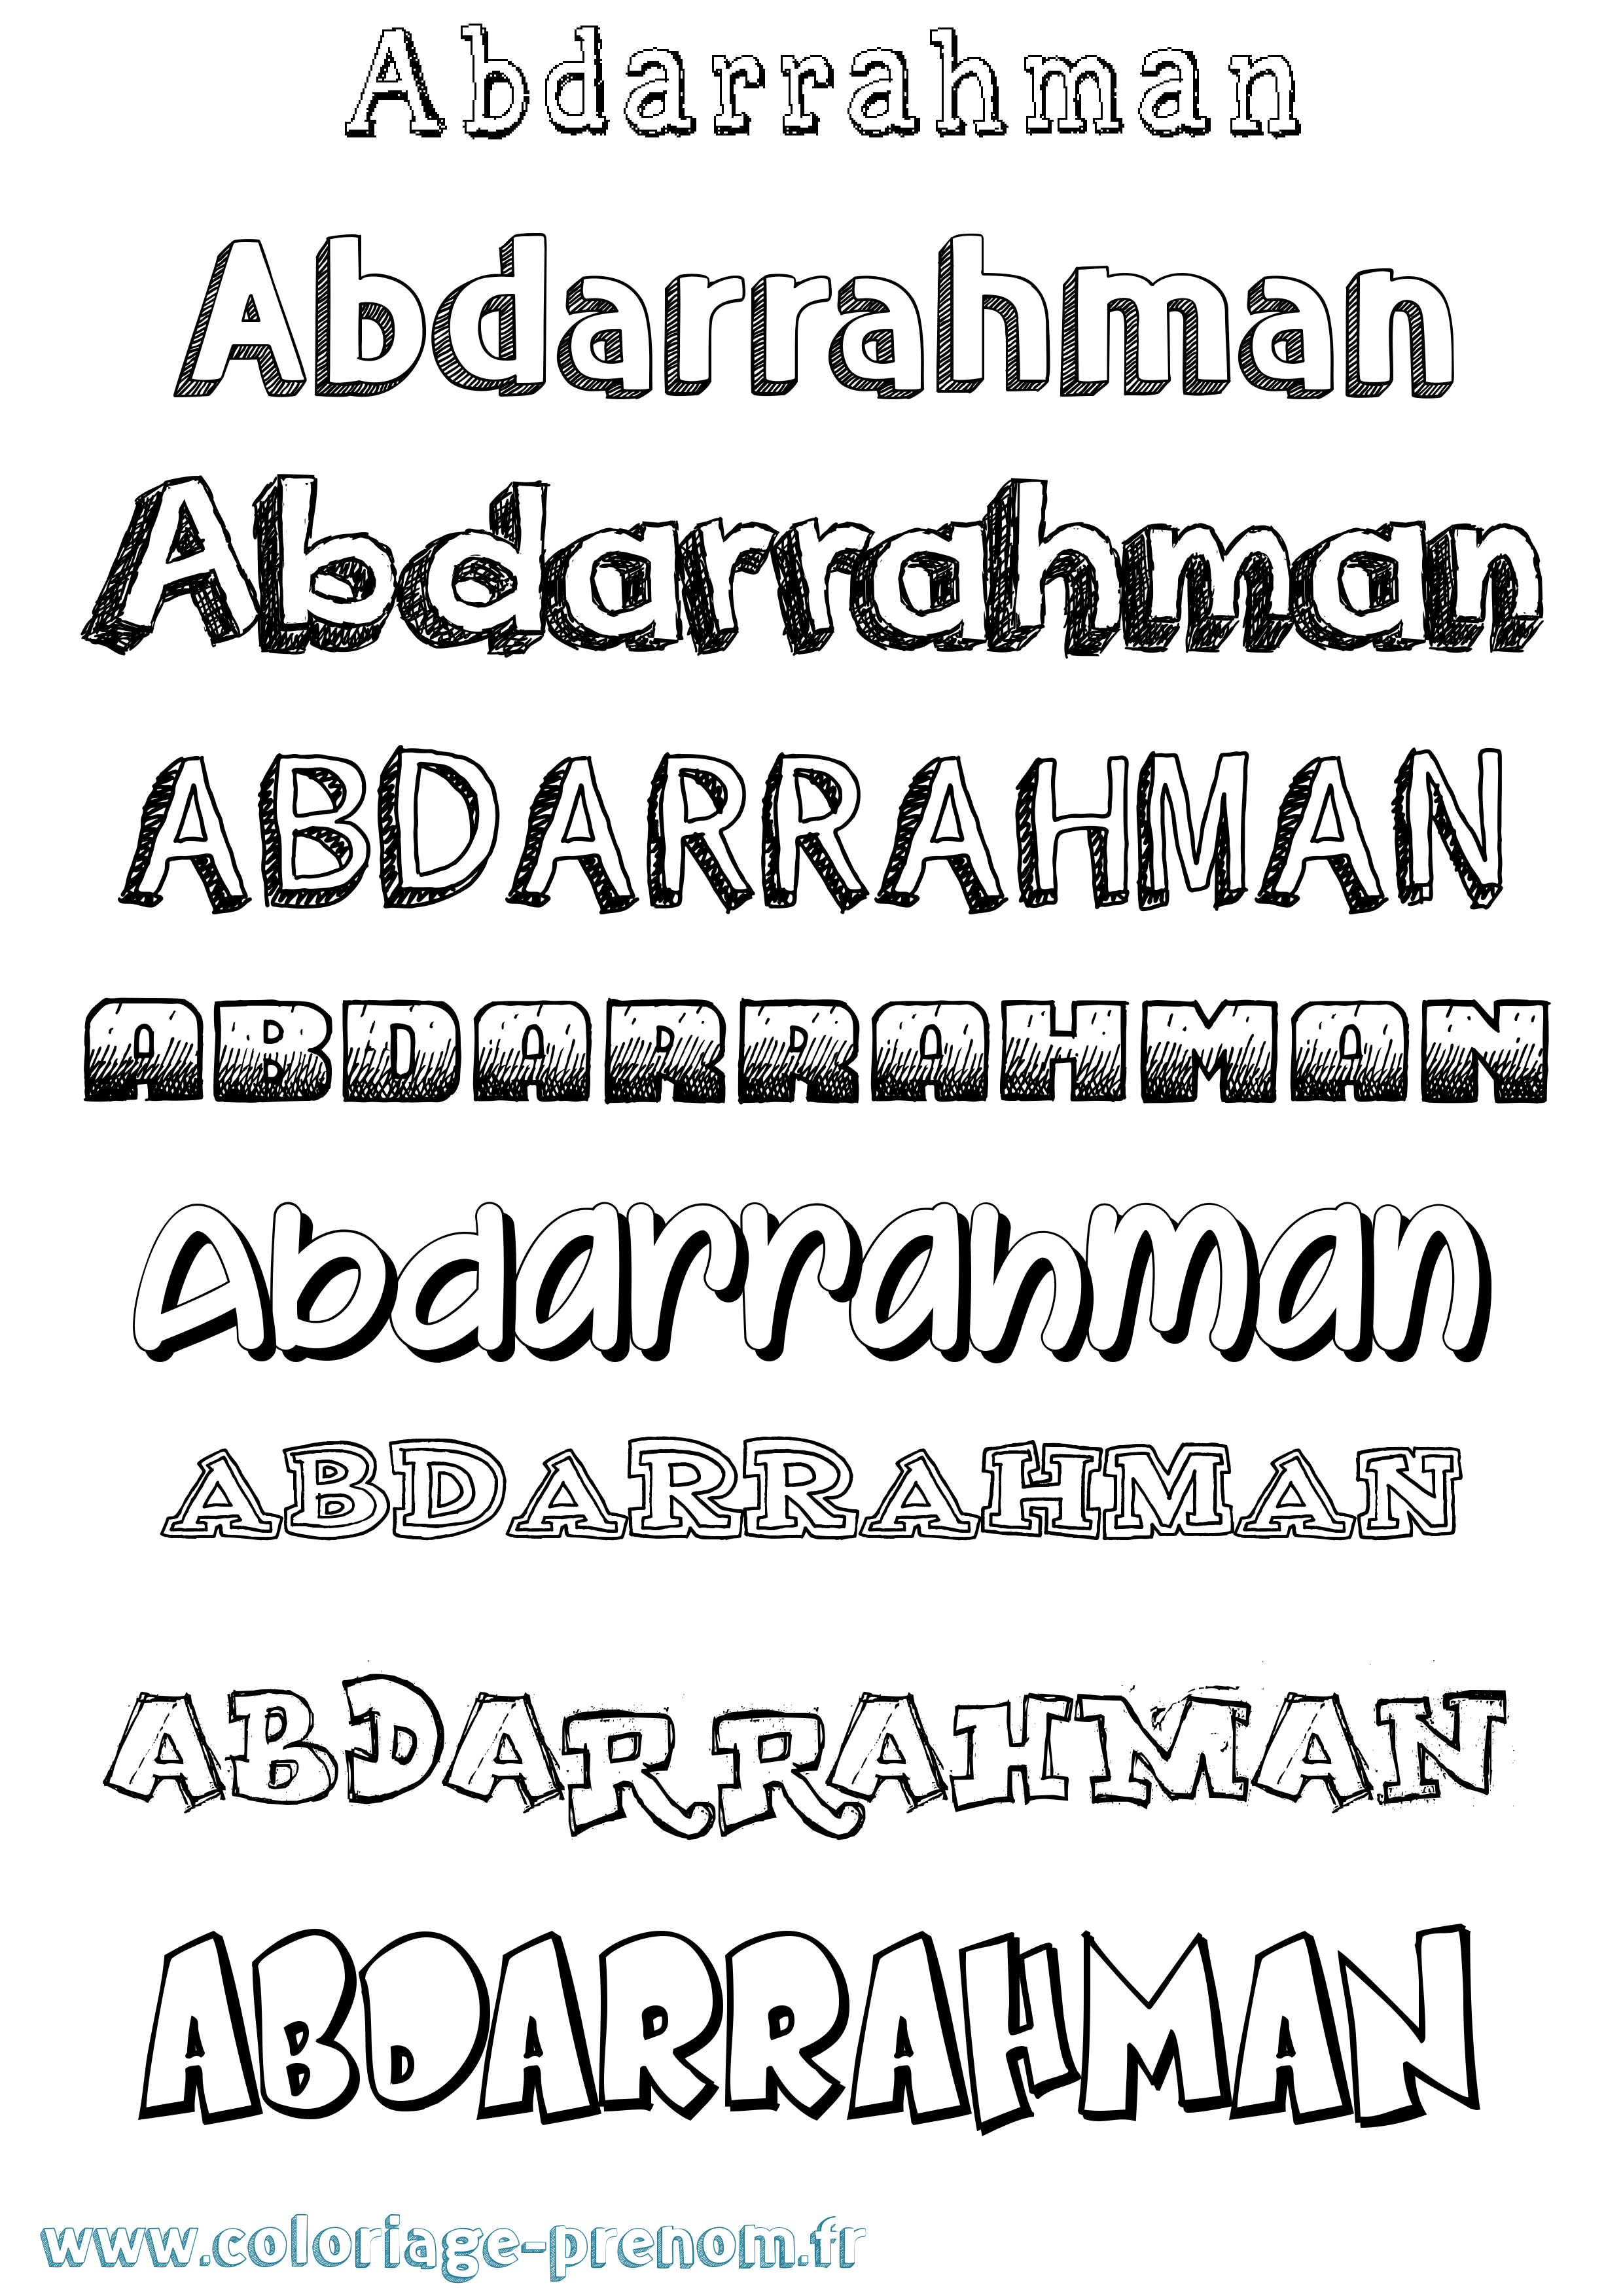 Coloriage prénom Abdarrahman Dessiné